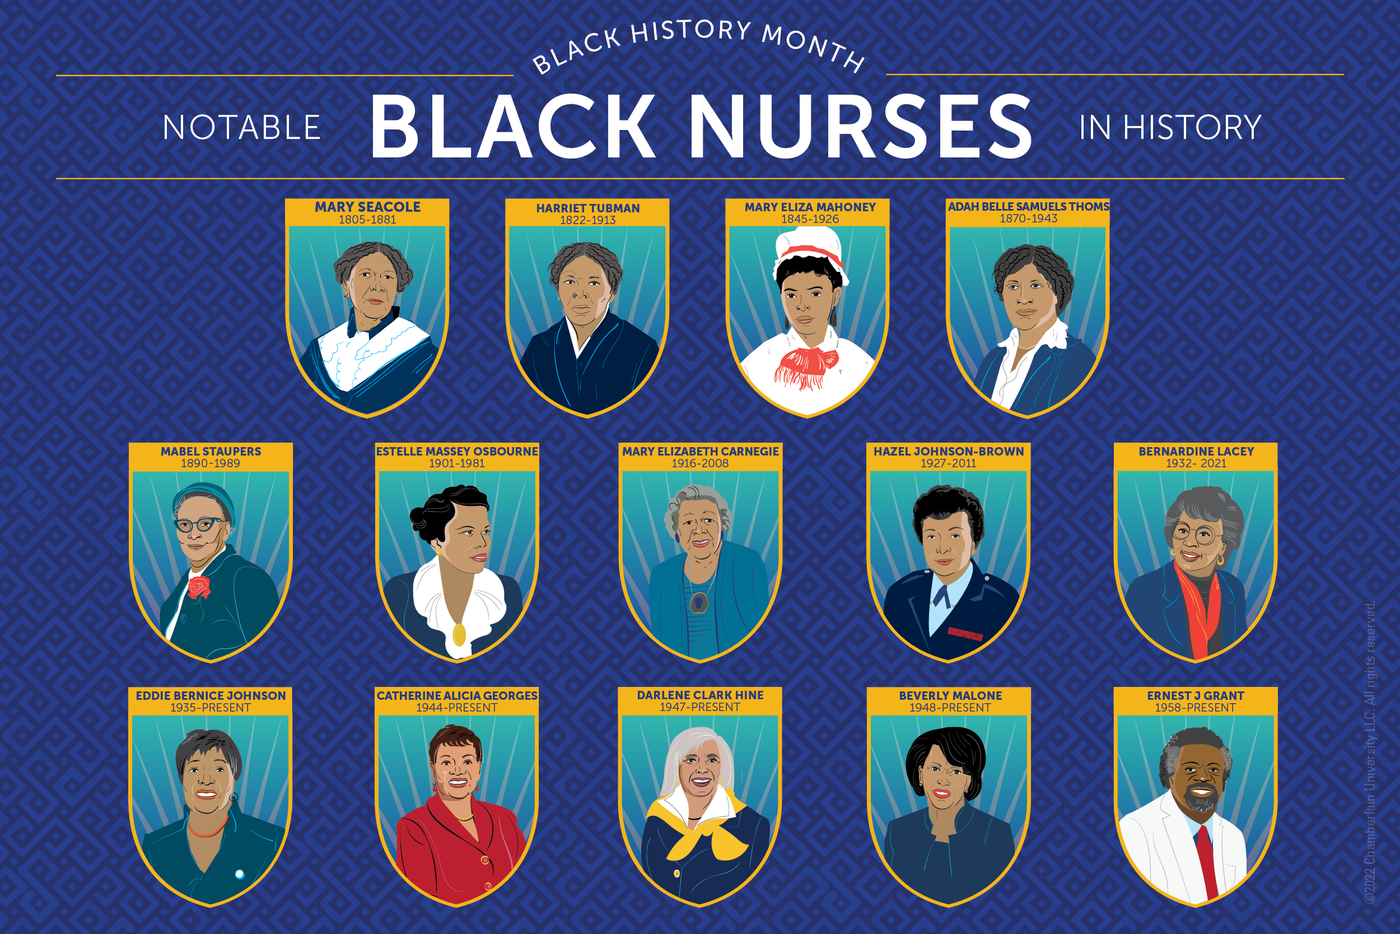 portraits of notable Black nurses